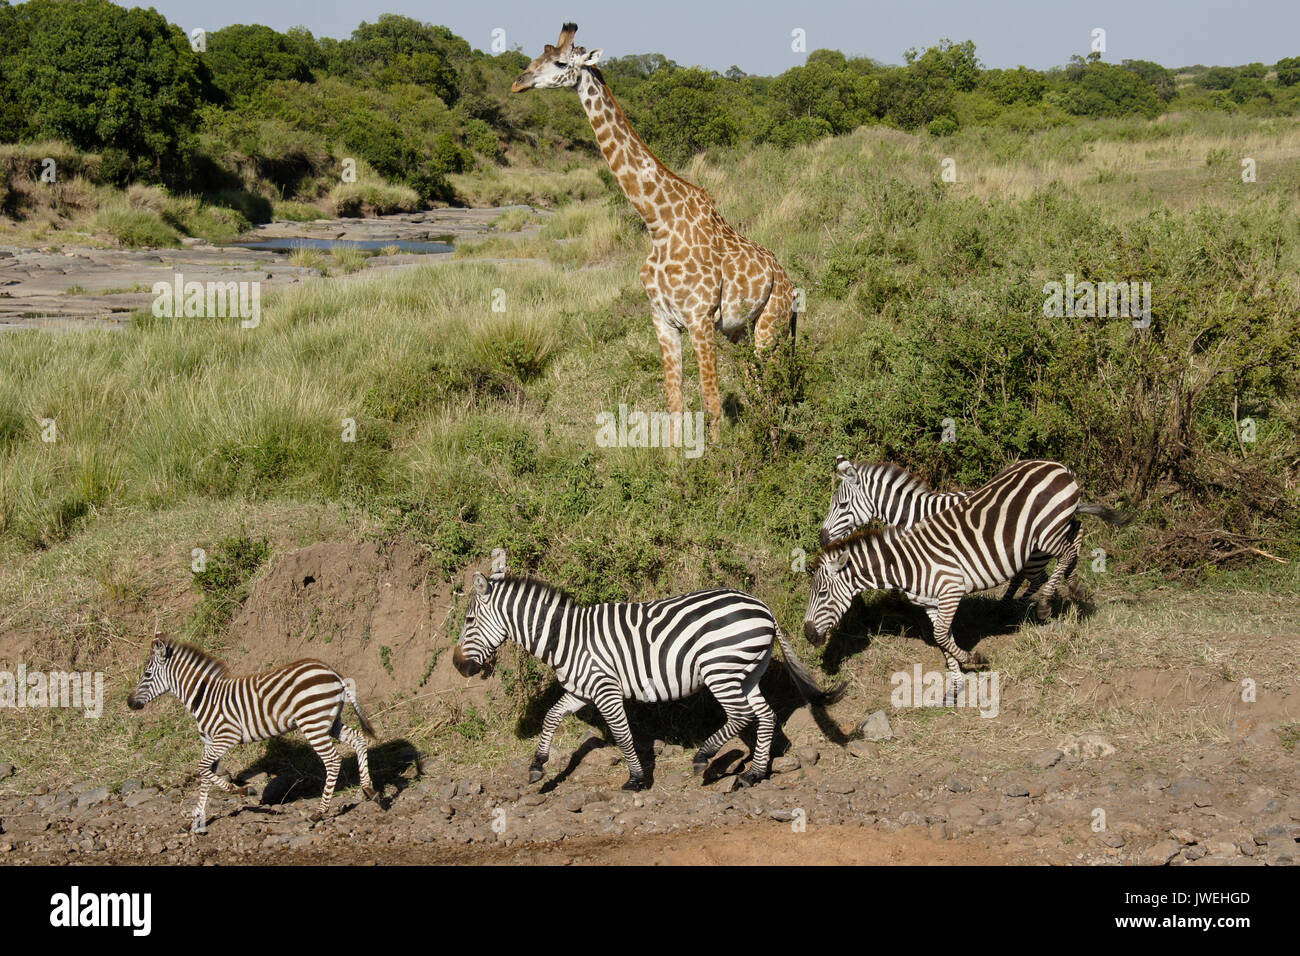 Burchell's (common or plains) zebra heading to river while Masai giraffe looks on, Masai Mara Game Reserve, Kenya Stock Photo